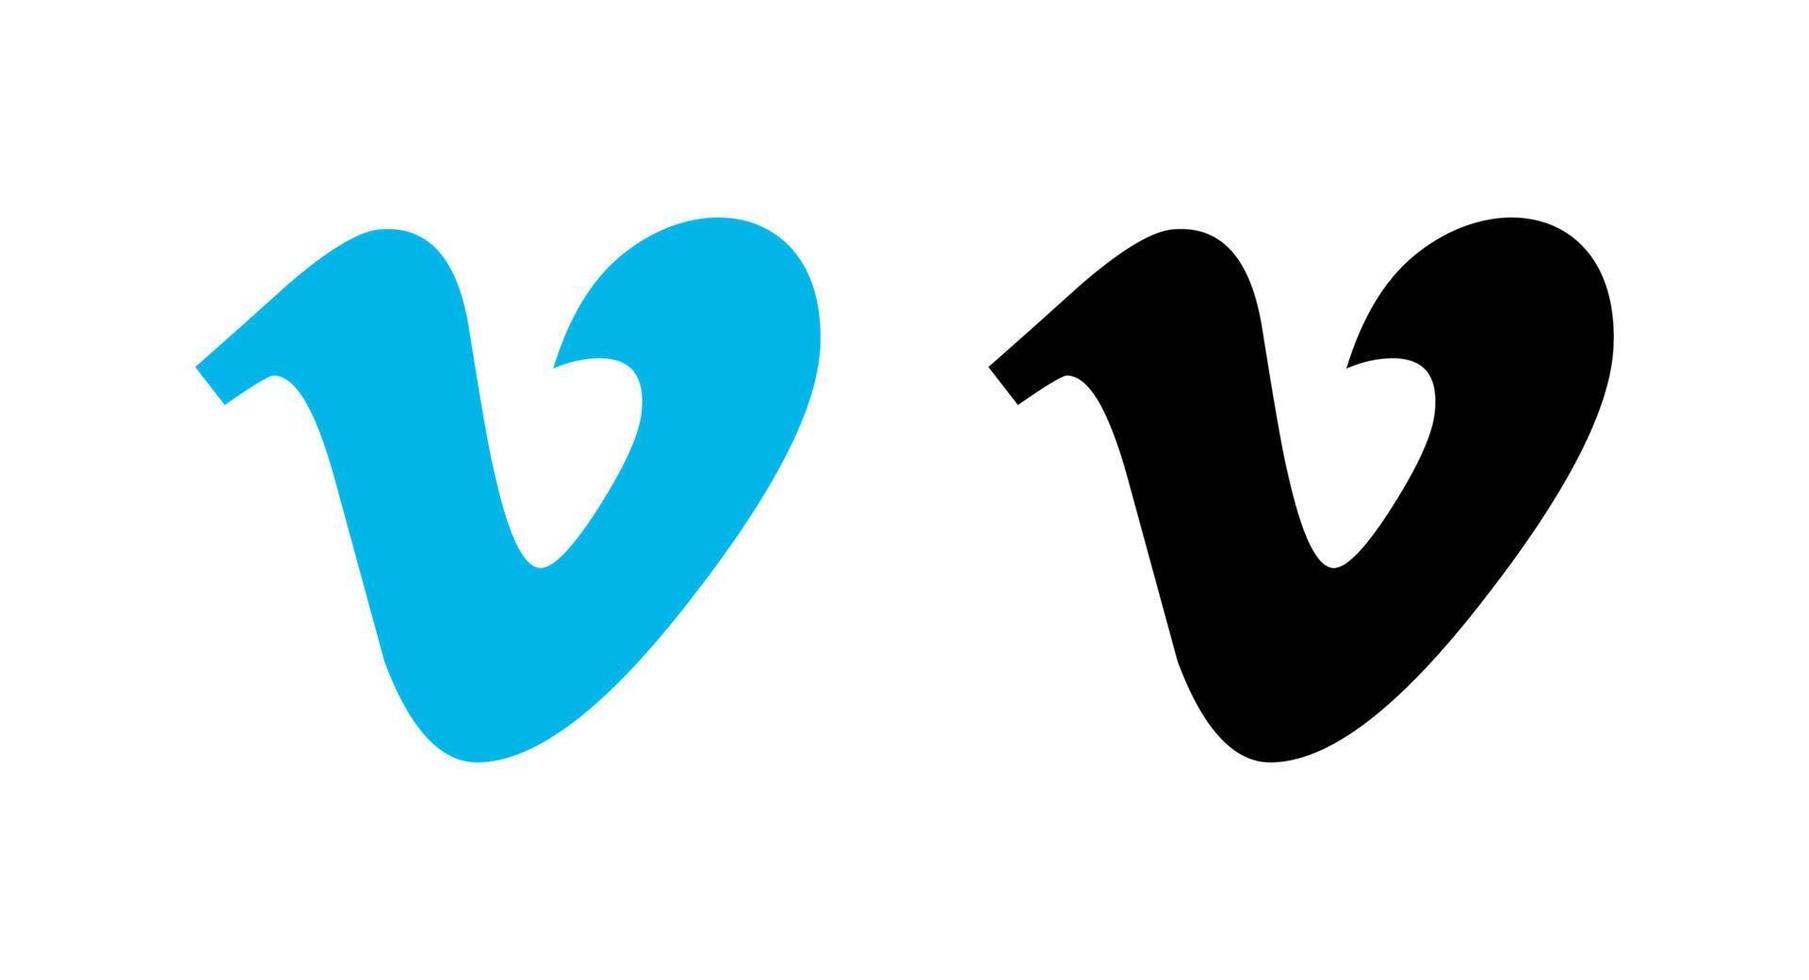 Vimeo-Logo, Vimeo-Symbol, freier Vektor des Vimeo-Symbols